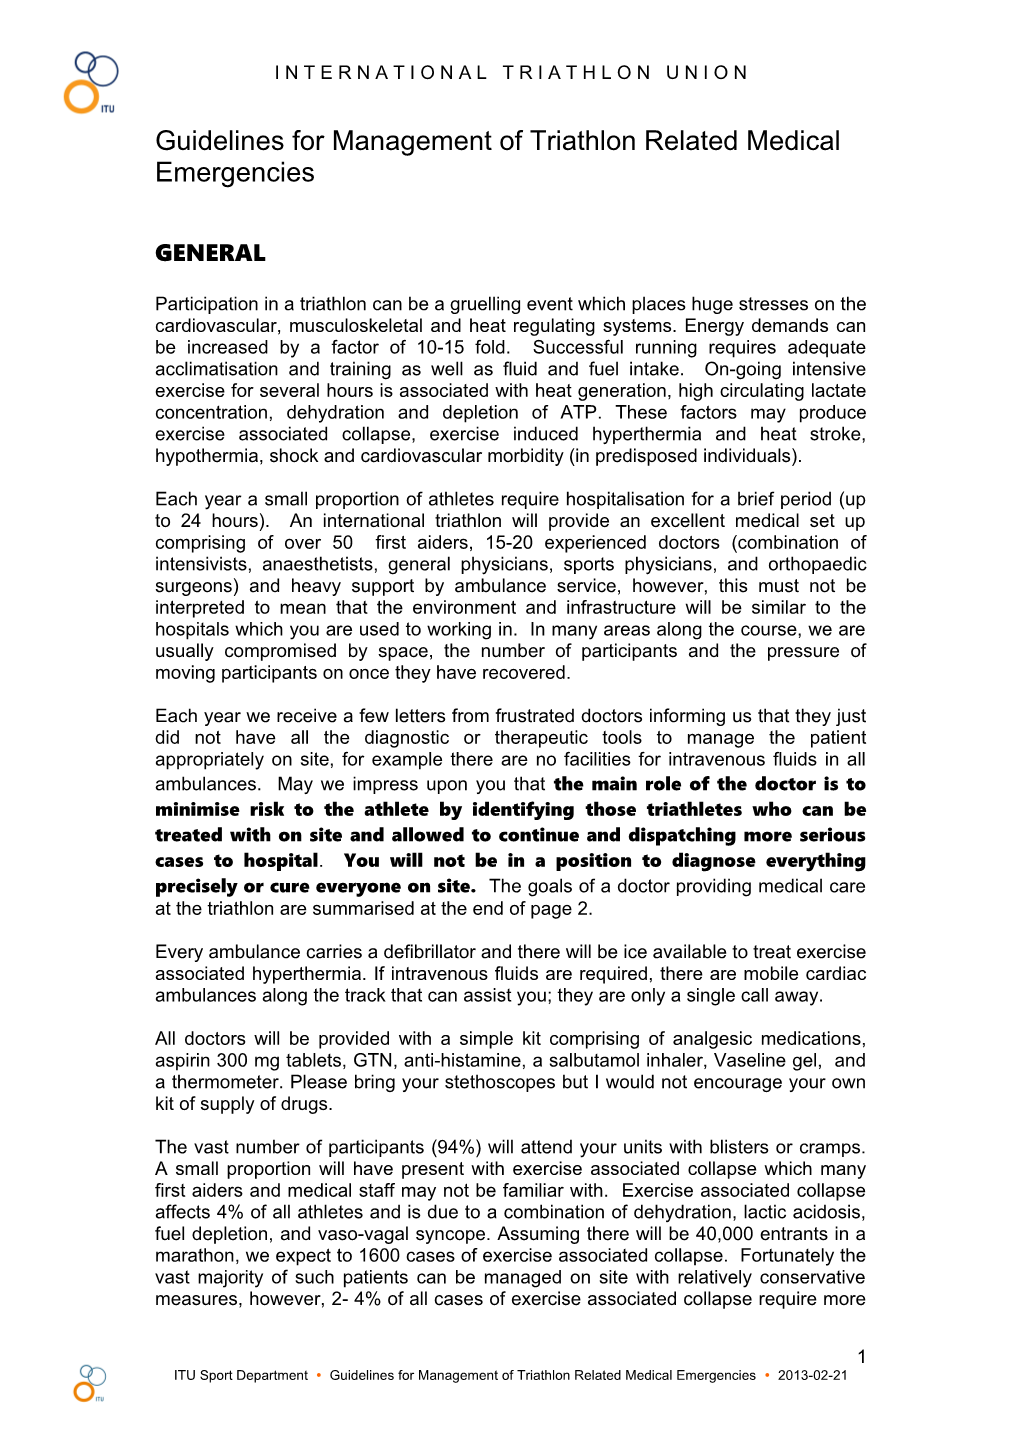 2008 Guidelines for Management of Marathon Related Medical Emergencies